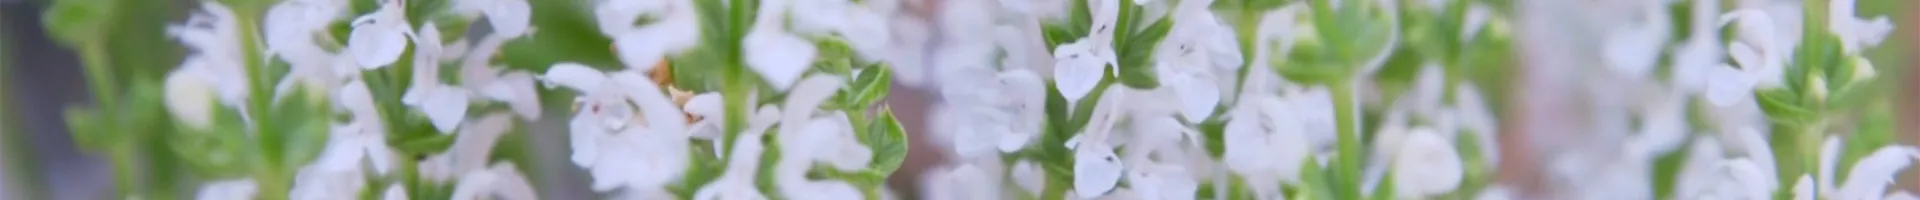 Steppensalbei - Einpflanzen im Garten (thumbnail).jpg